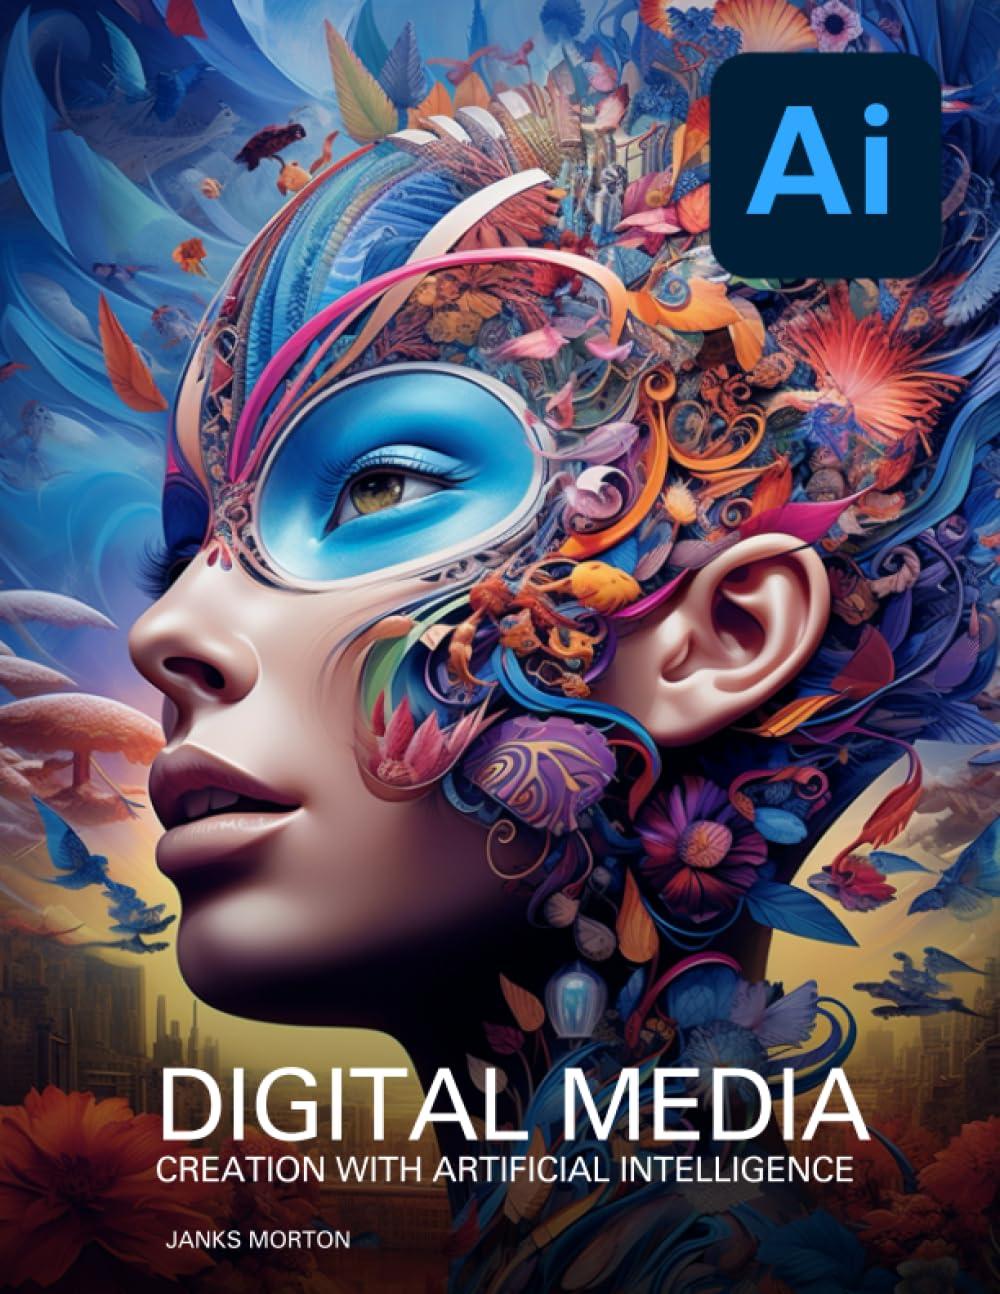 digital media creation with artificial intelligence 1st edition janks morton b0cd16drkl, 979-8853961241